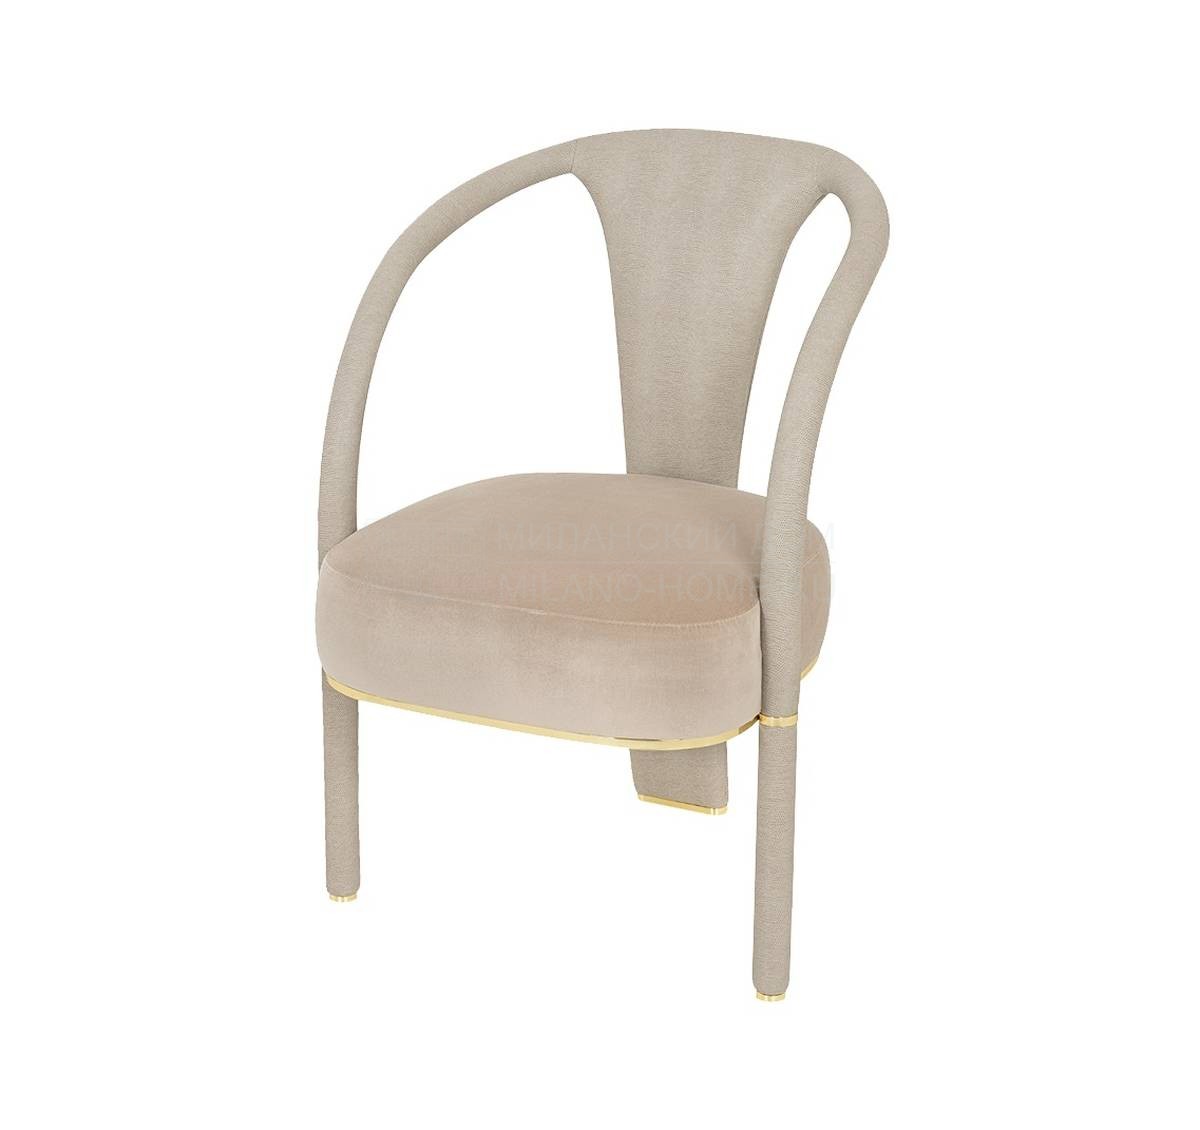 Полукресло Sanremo chair из Португалии фабрики FRATO